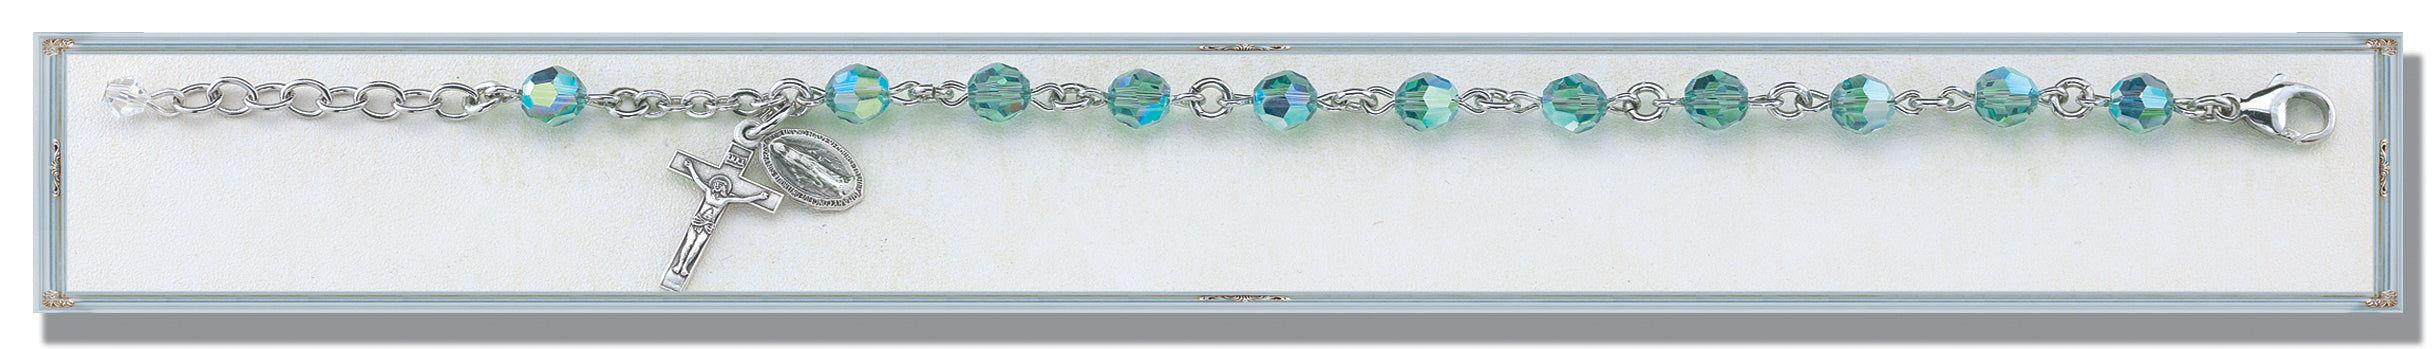 Erinite Round Faceted Swarovski Crystal Bracelet